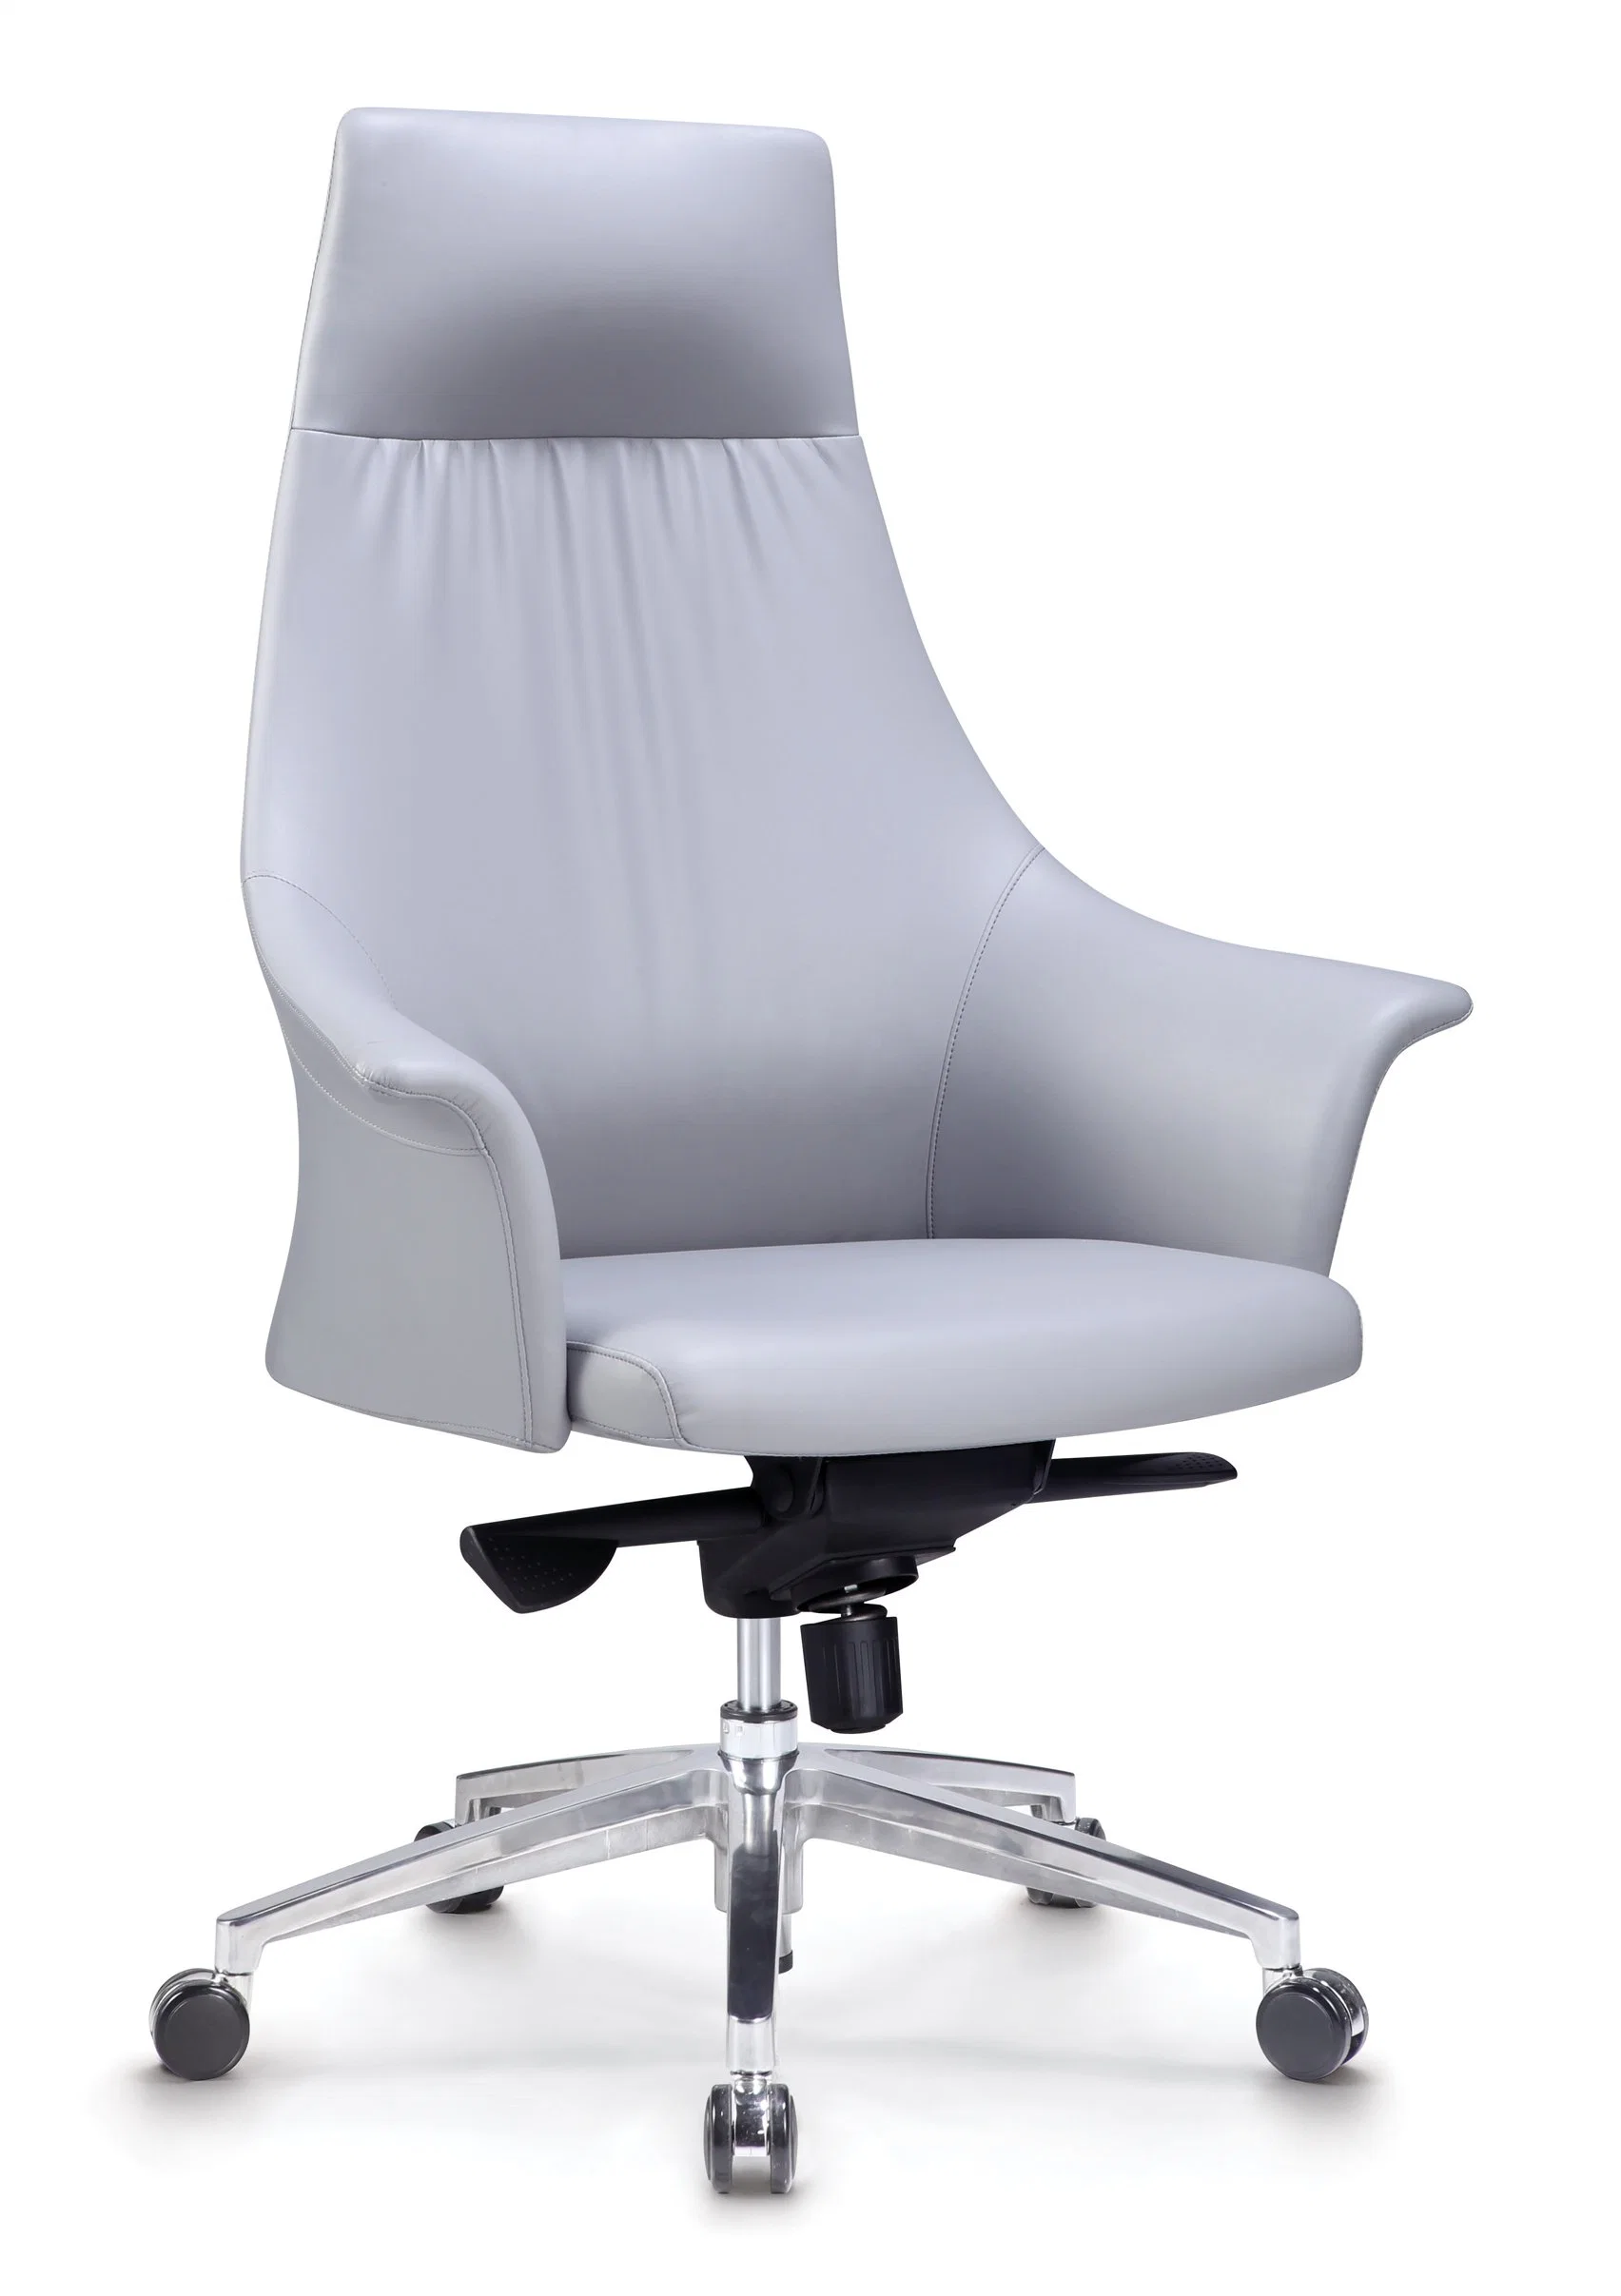 Zode Diseño simple silla Oficina de cuero High Back Oficina de Conferencias Presidente